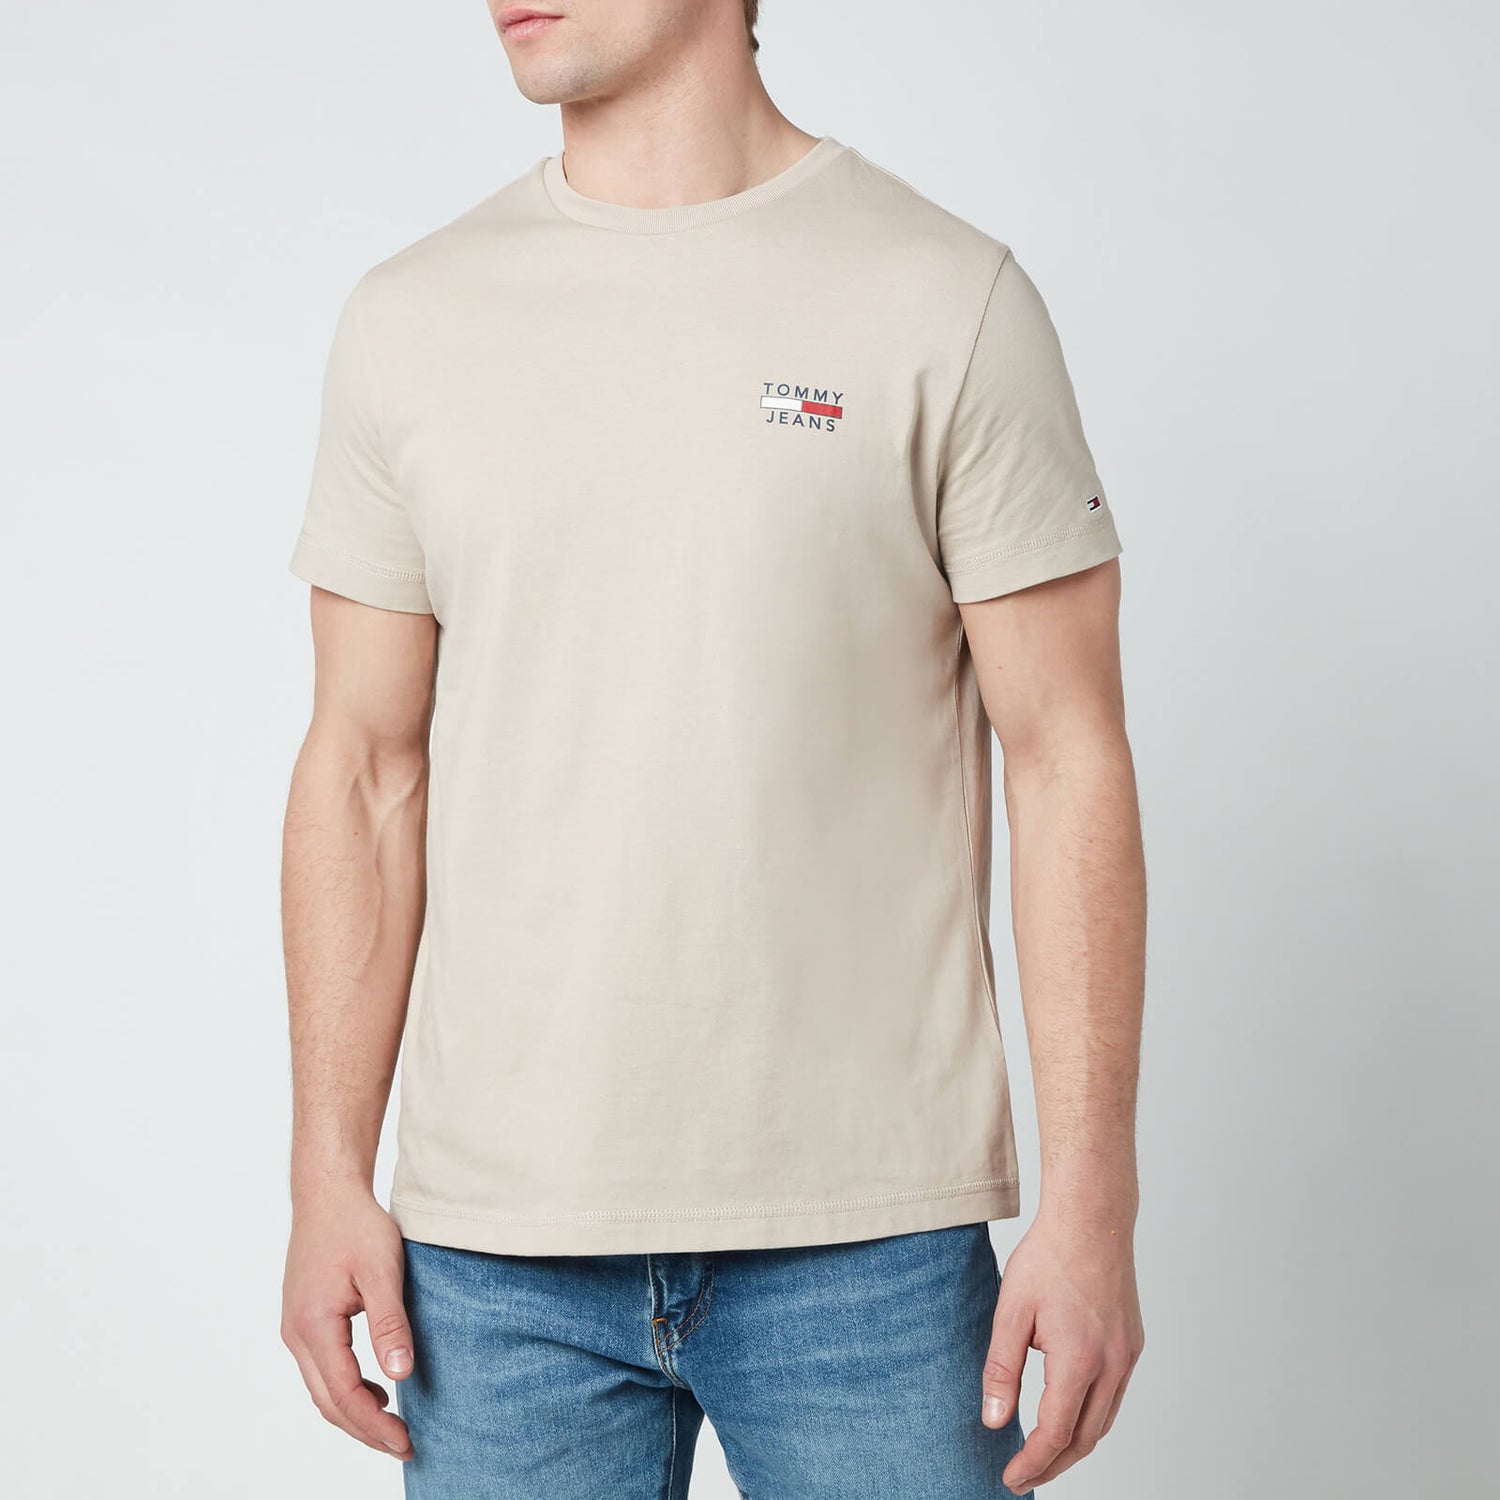 Tommy Jeans Men's Chest Logo T-Shirt - Soft Beige